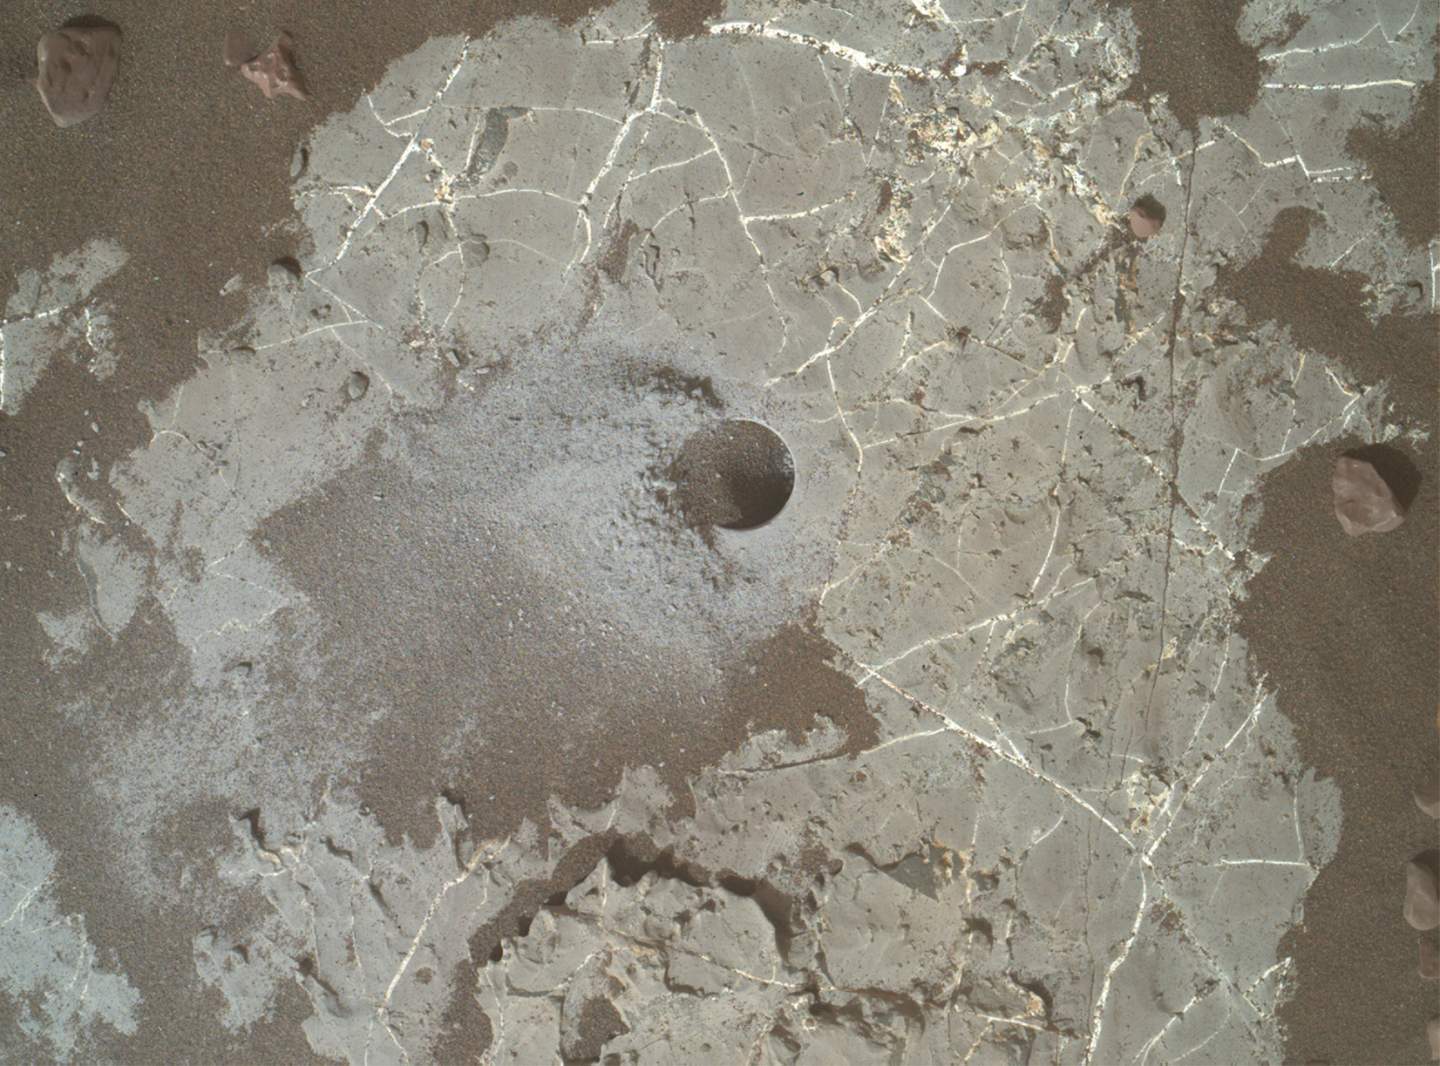 highfielddrillhole - کاوشگر کنجکاوی ناسا این روزها بر روی مریخ به چه کاری مشغول است؟